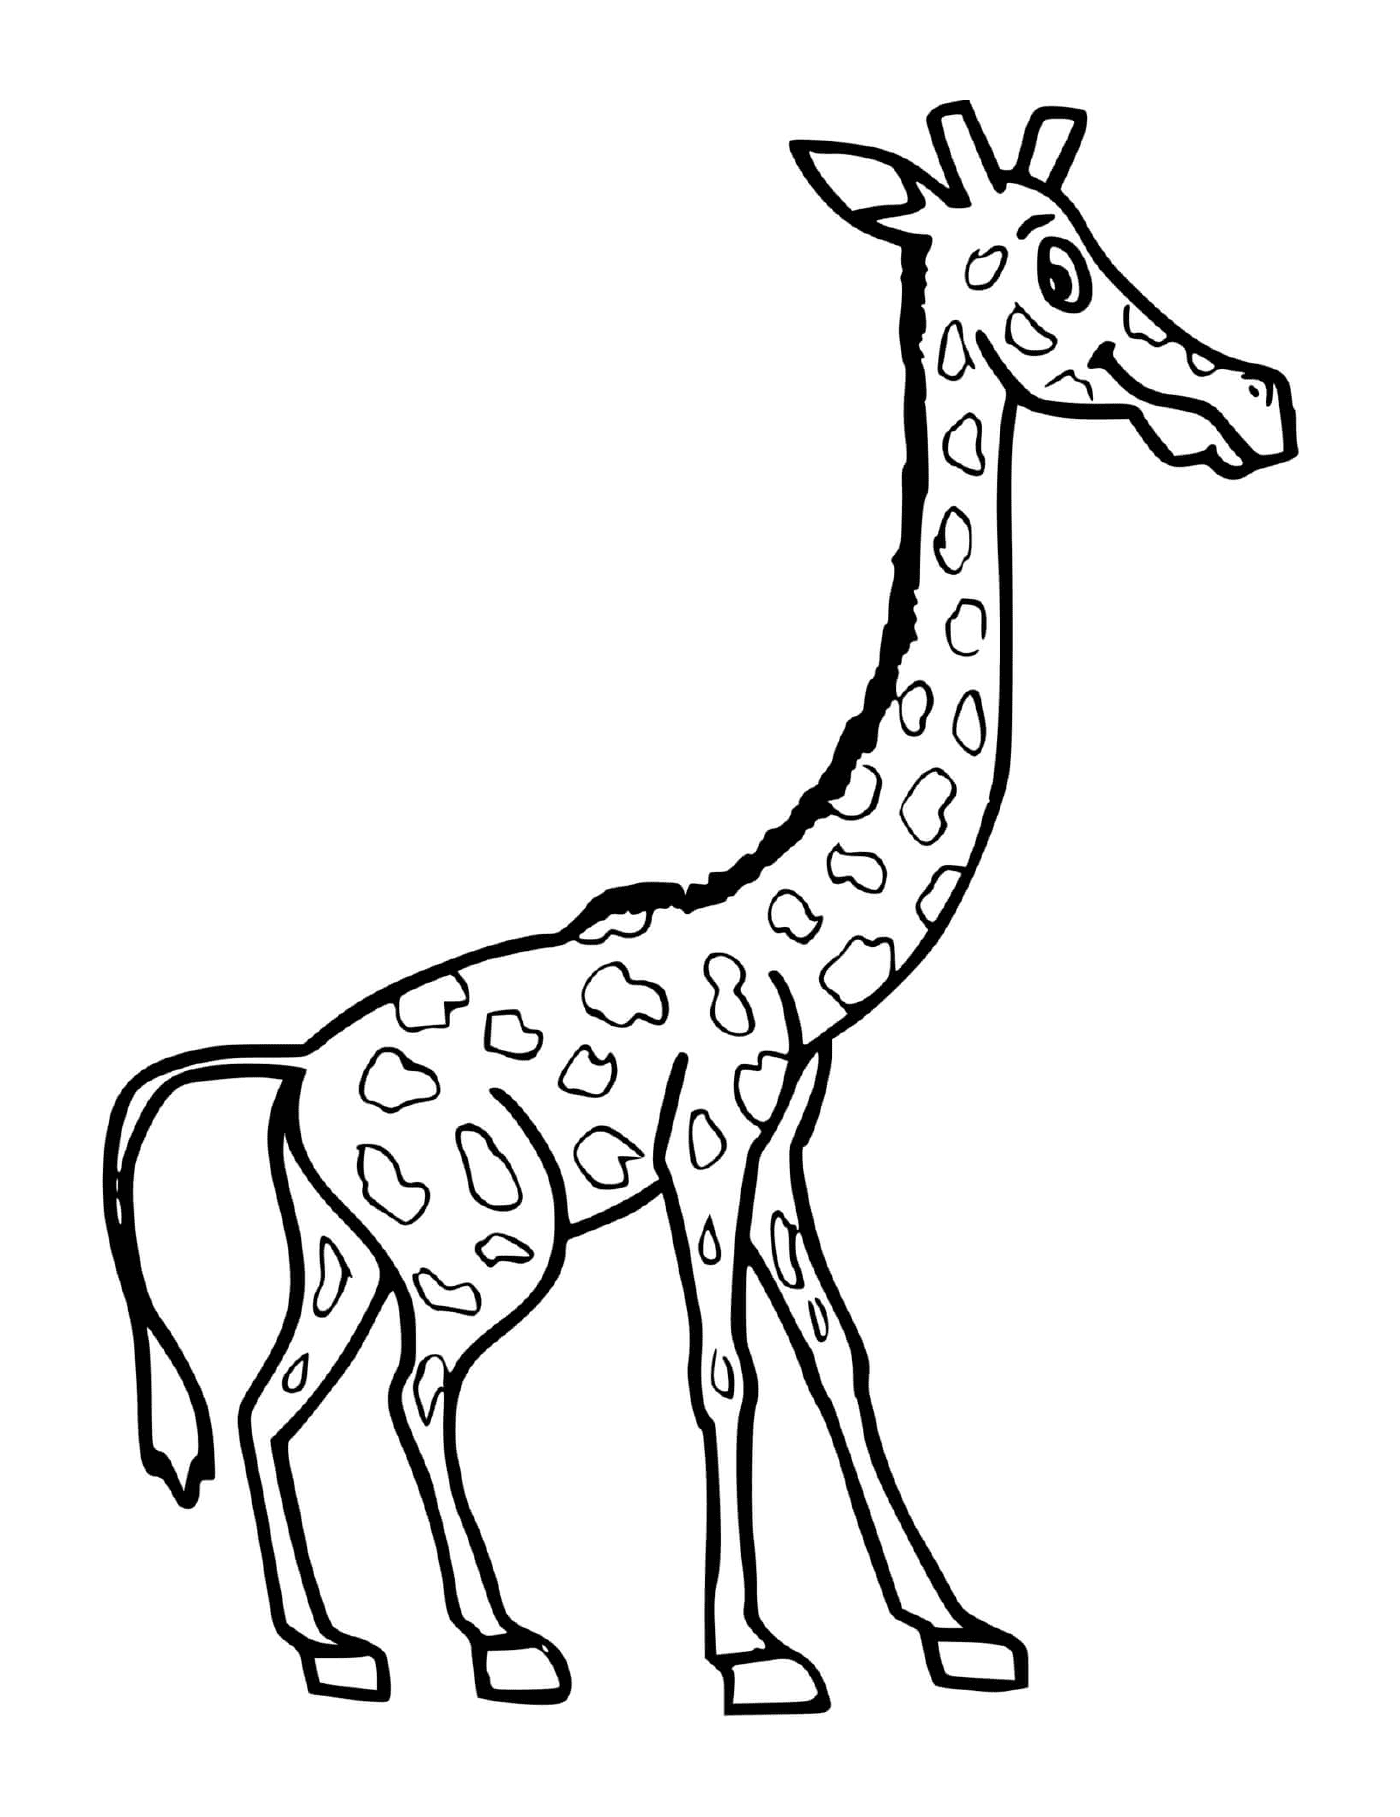  Uma grande girafa 